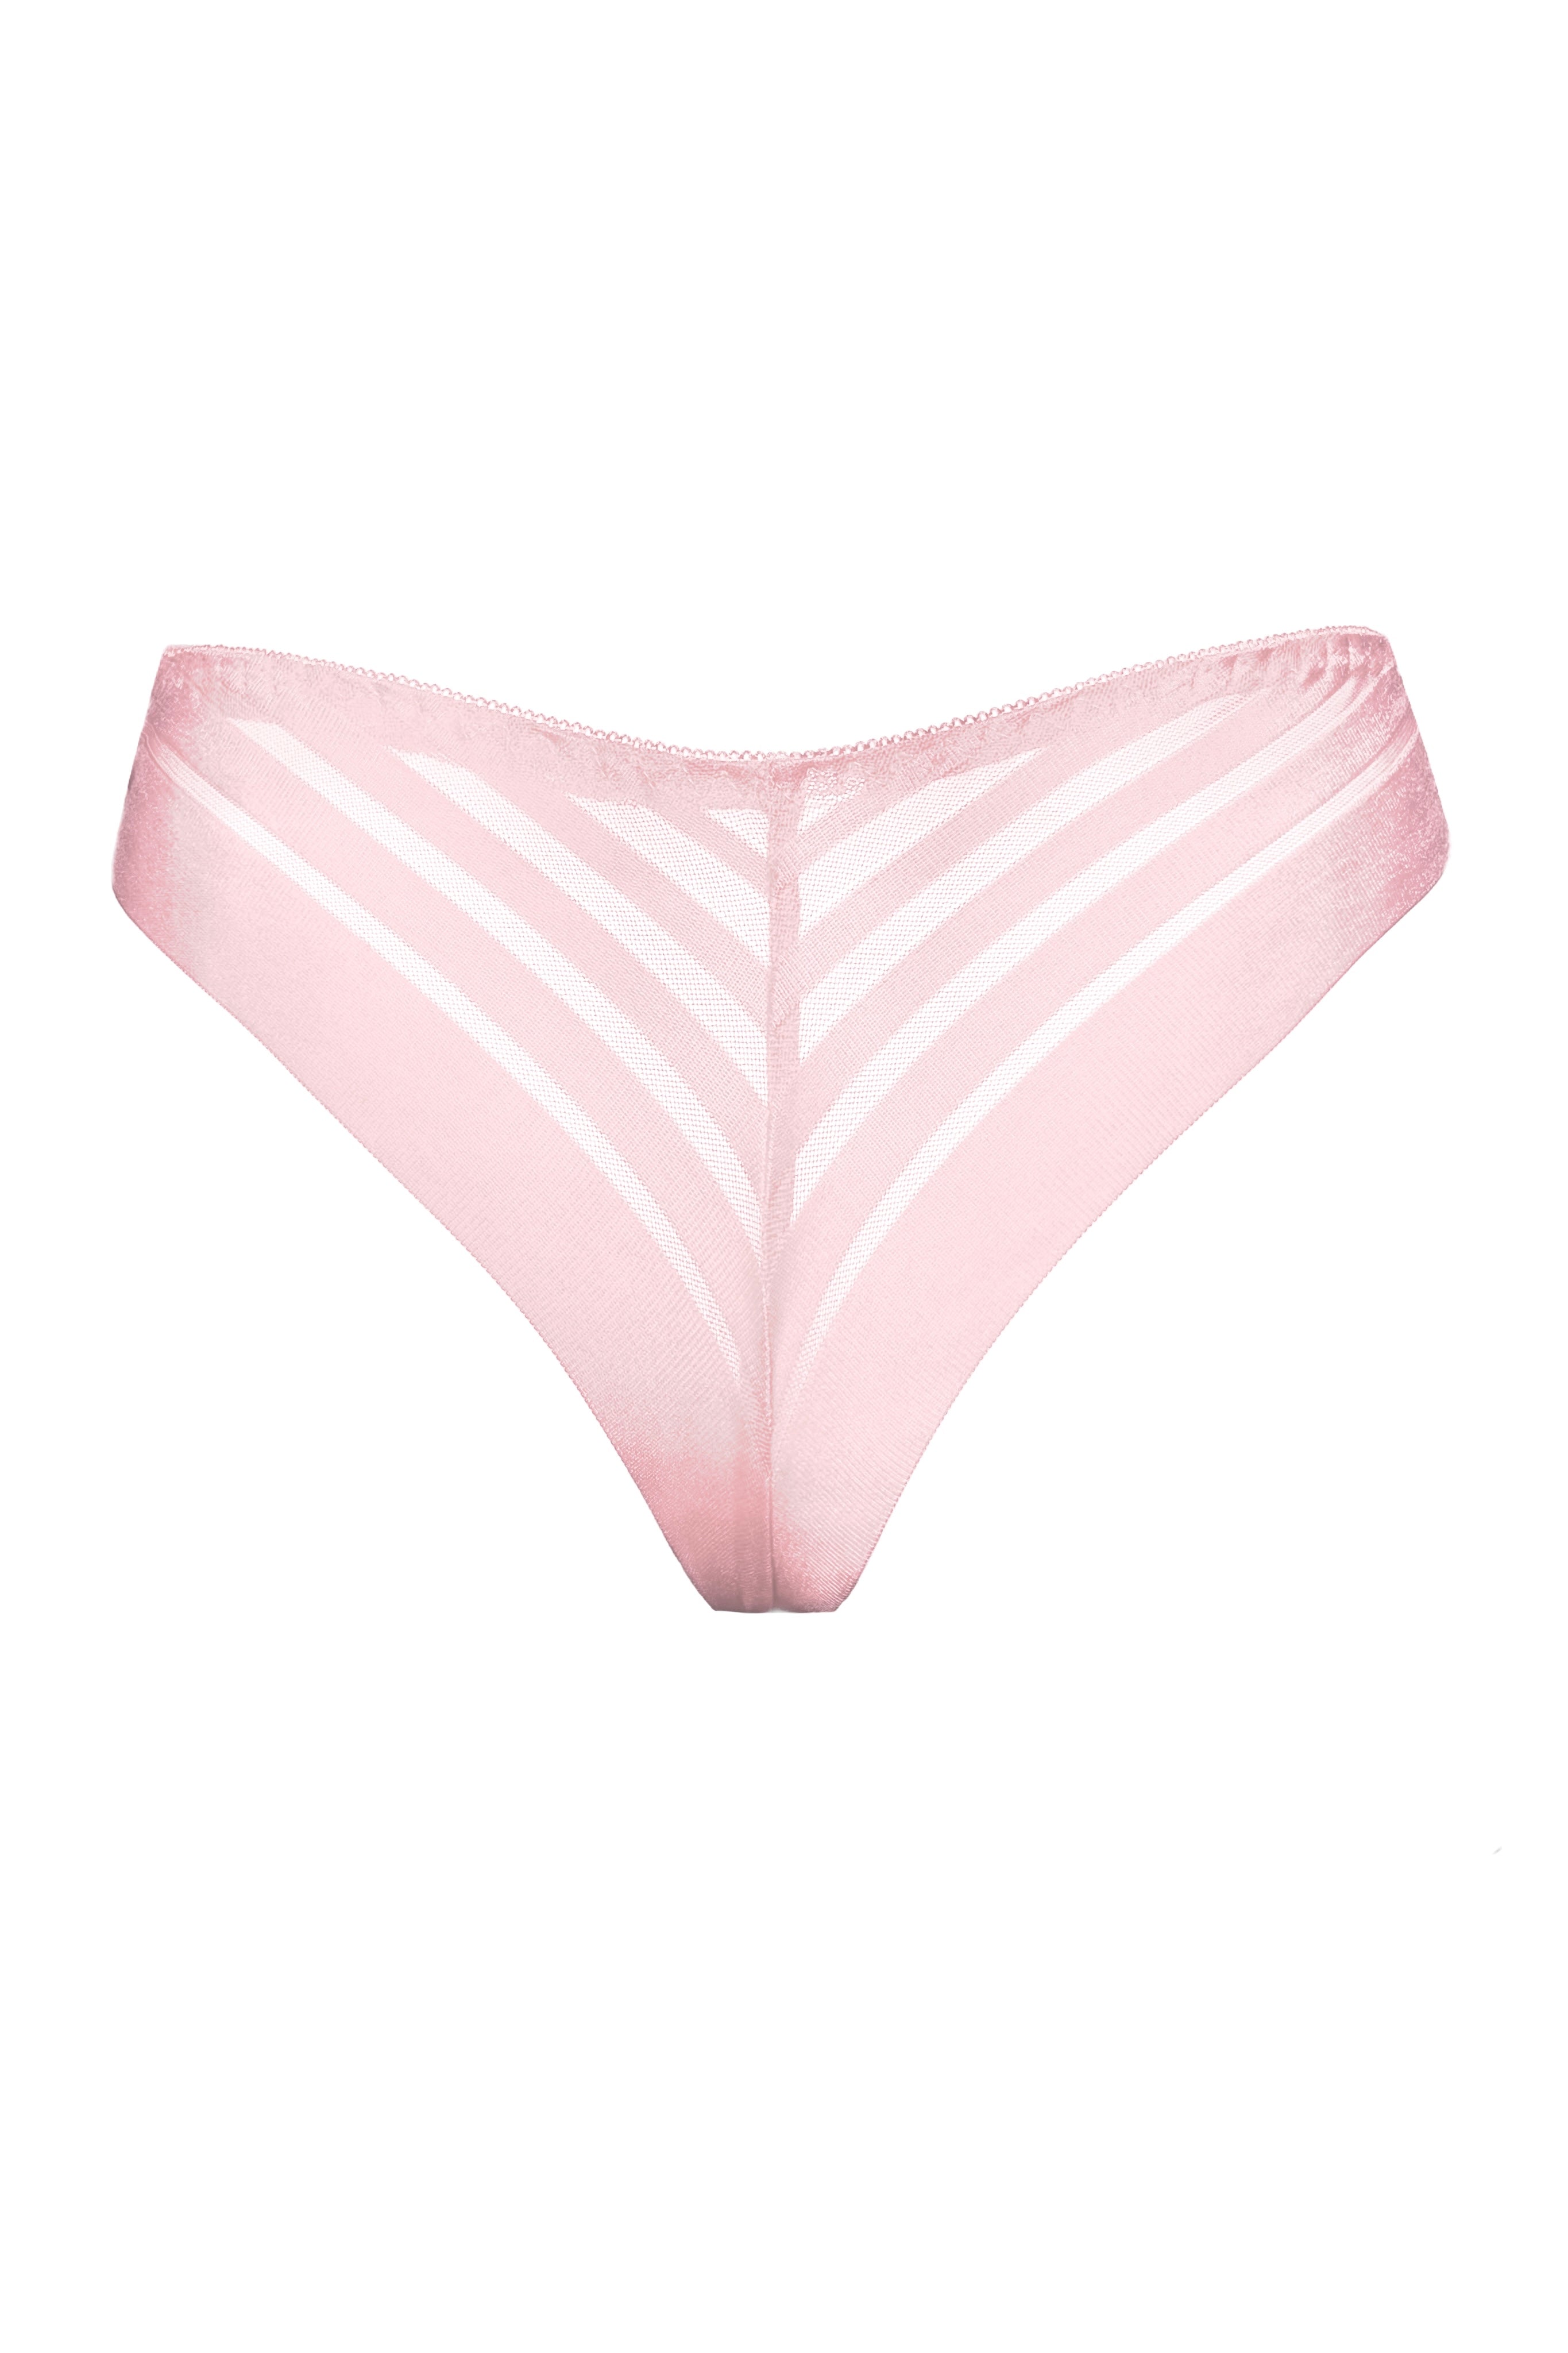 Lucy pink seamless brazilian panties